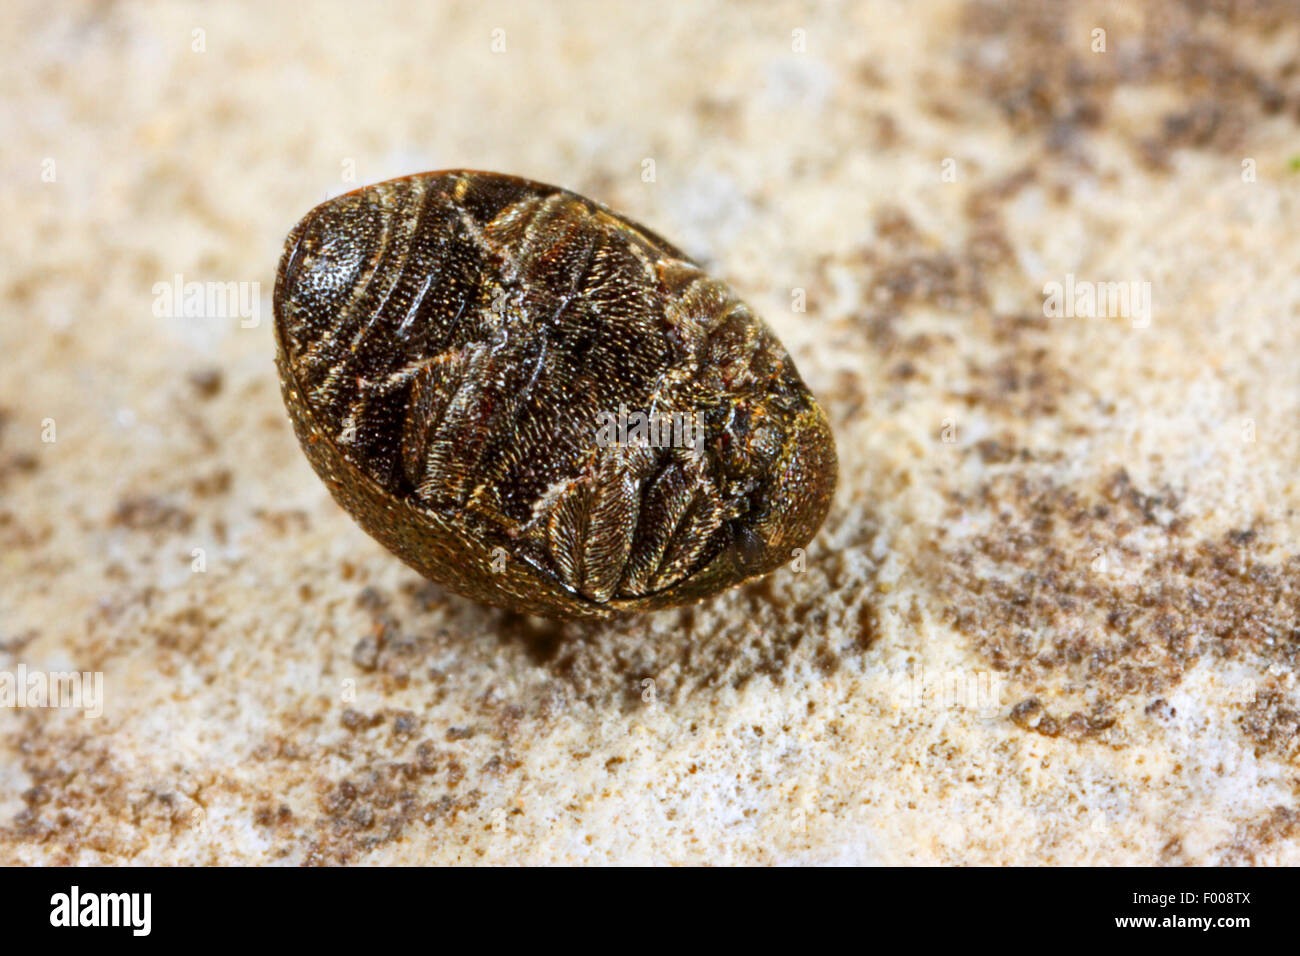 Pill beetle (Lamprobyrrhulus nitidus, Byrrhus nitidus), on a stone, full-length portrait from below, Germany Stock Photo